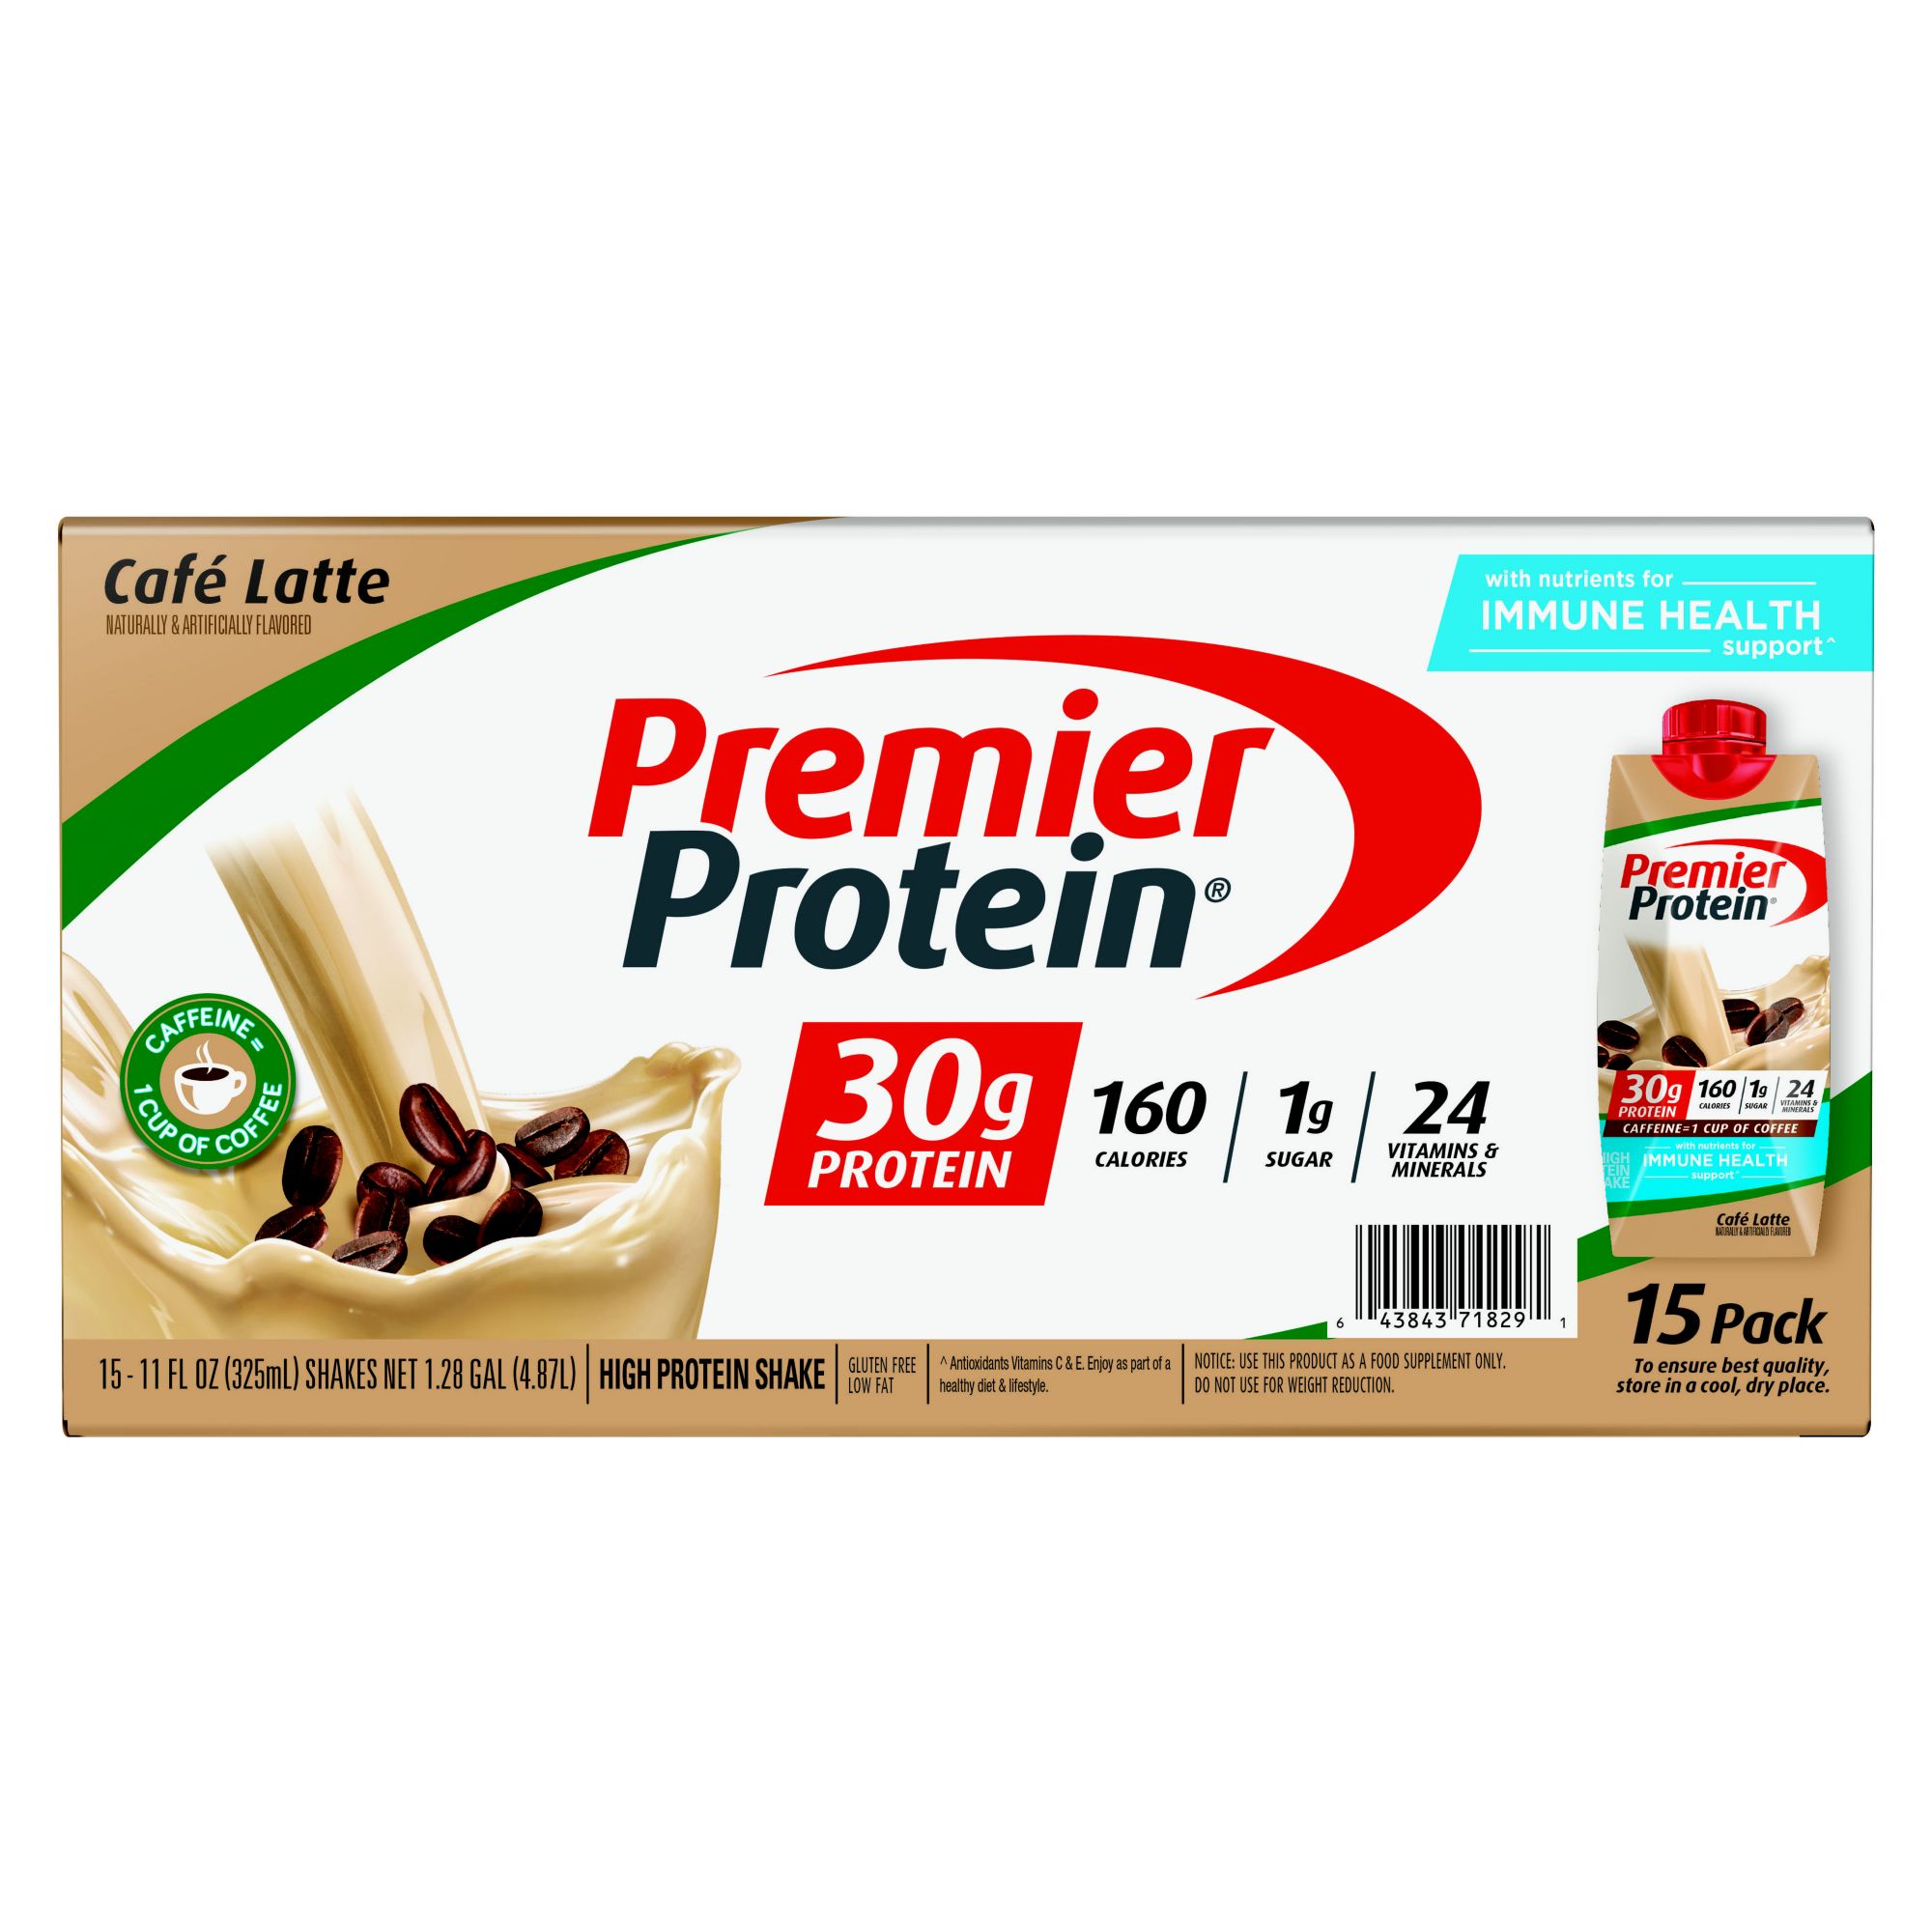 Premier Protein Cafe Latte Shake, 15 ct./11 oz.